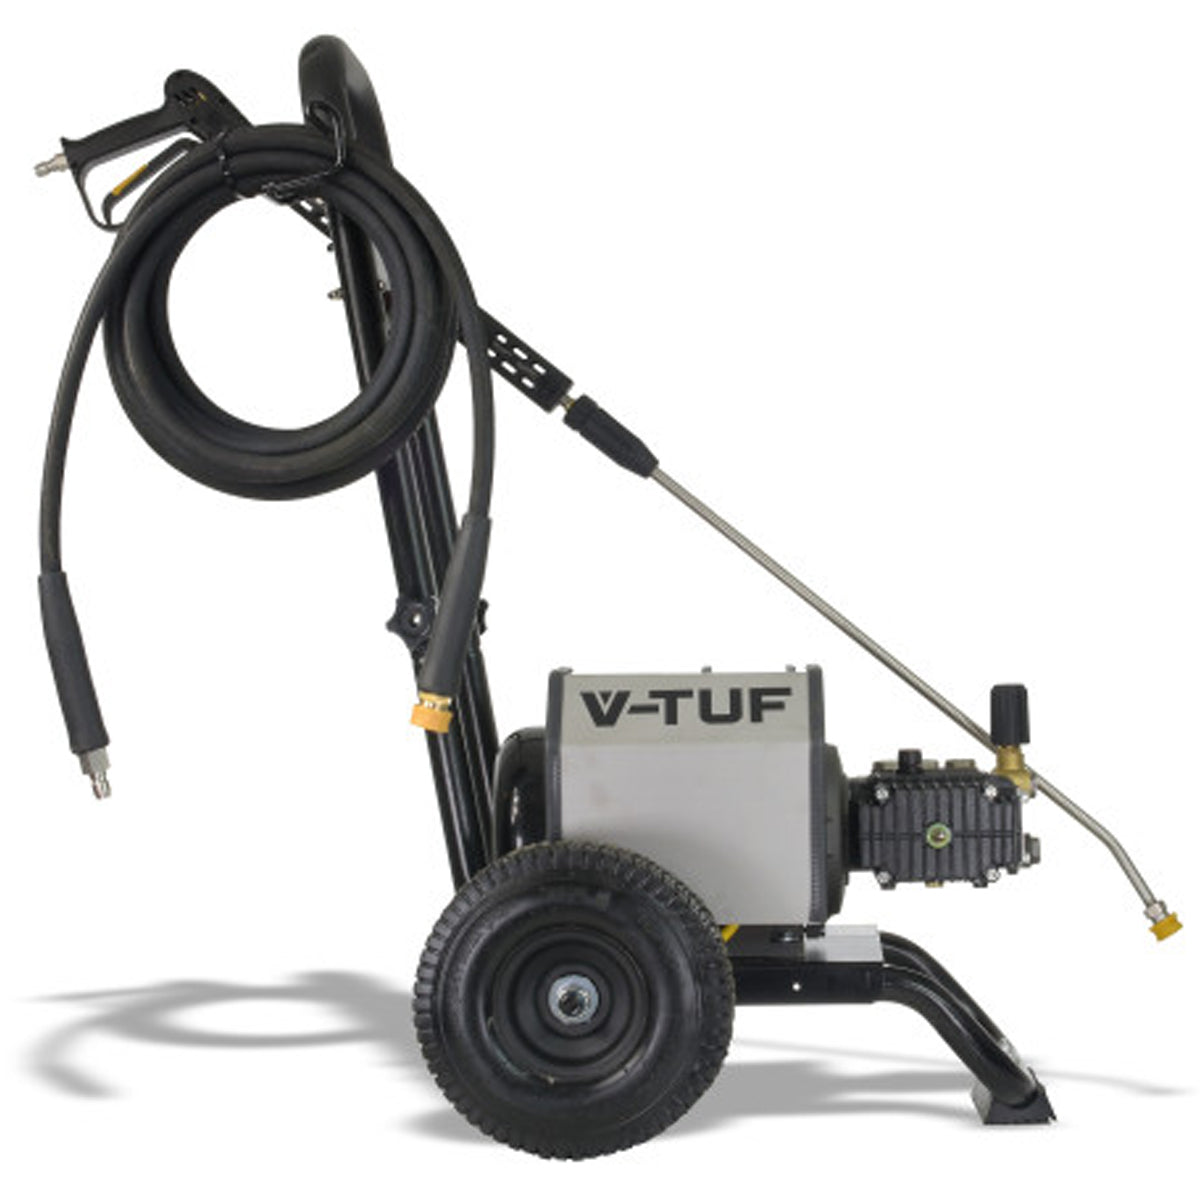 V-TUF VTUF240 Cold Water Pressure Washer 12L/min 240V